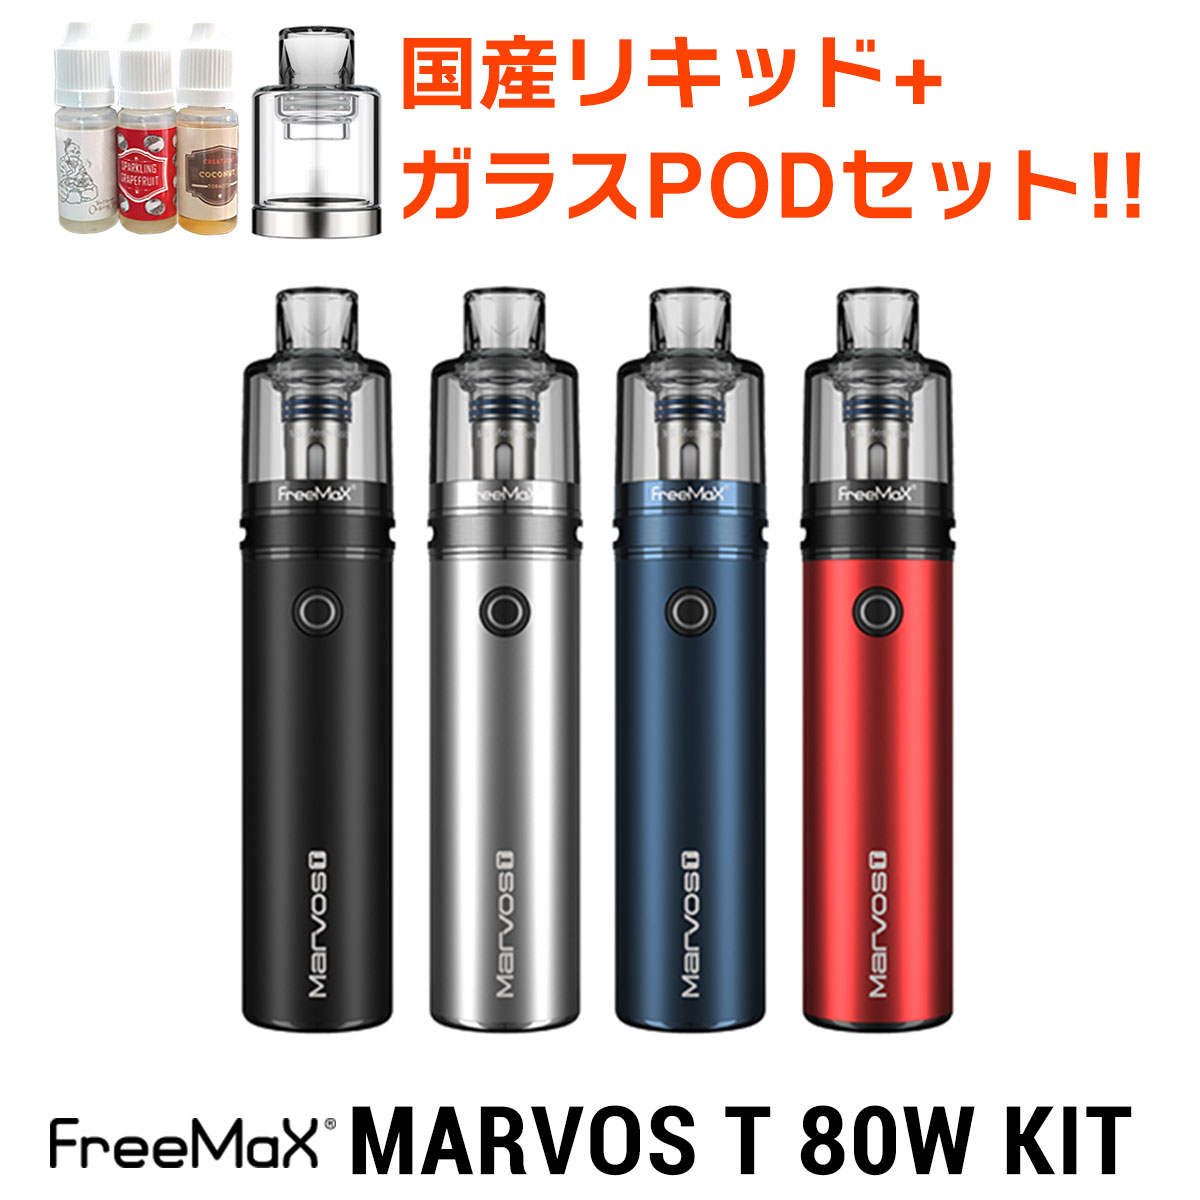  Freemax Marvos T 80W KIT フリーマックス マーボスT 電子タバコ vape pod pod型 マーボス 禁煙 べイプ 味重視 ニコチン0